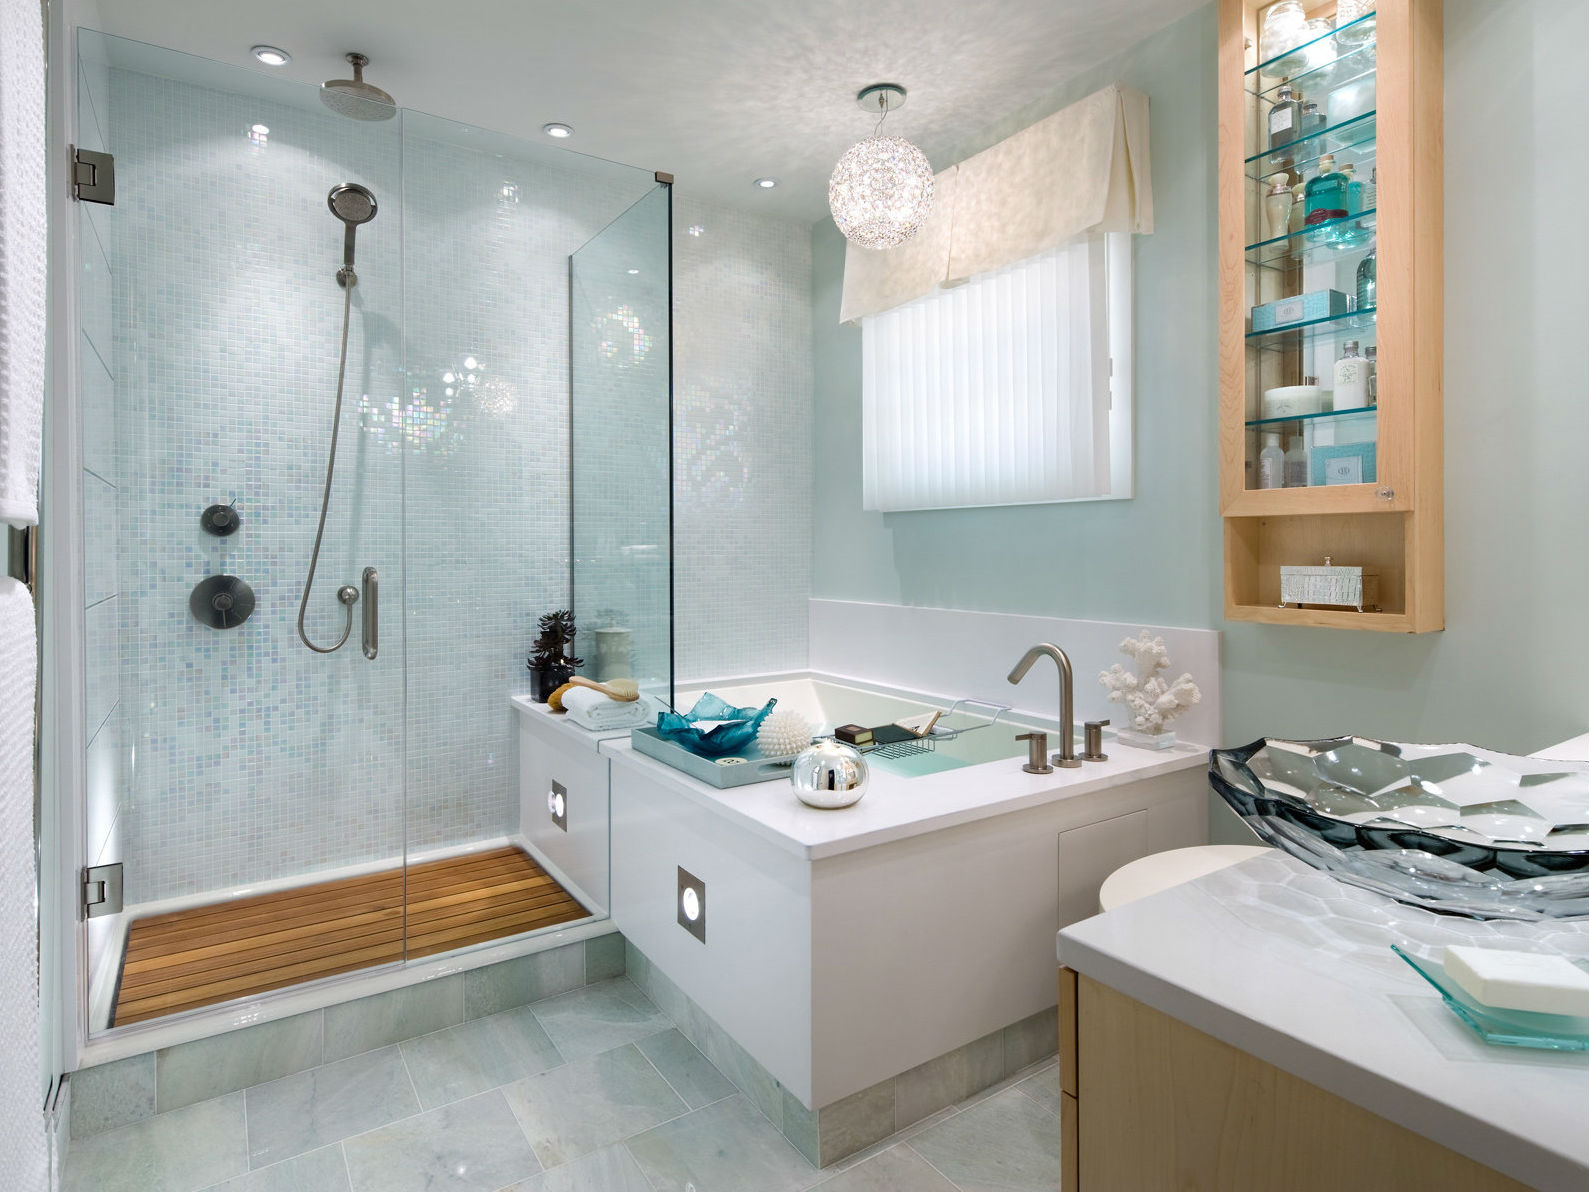 High-tech glass and tile bathroom design